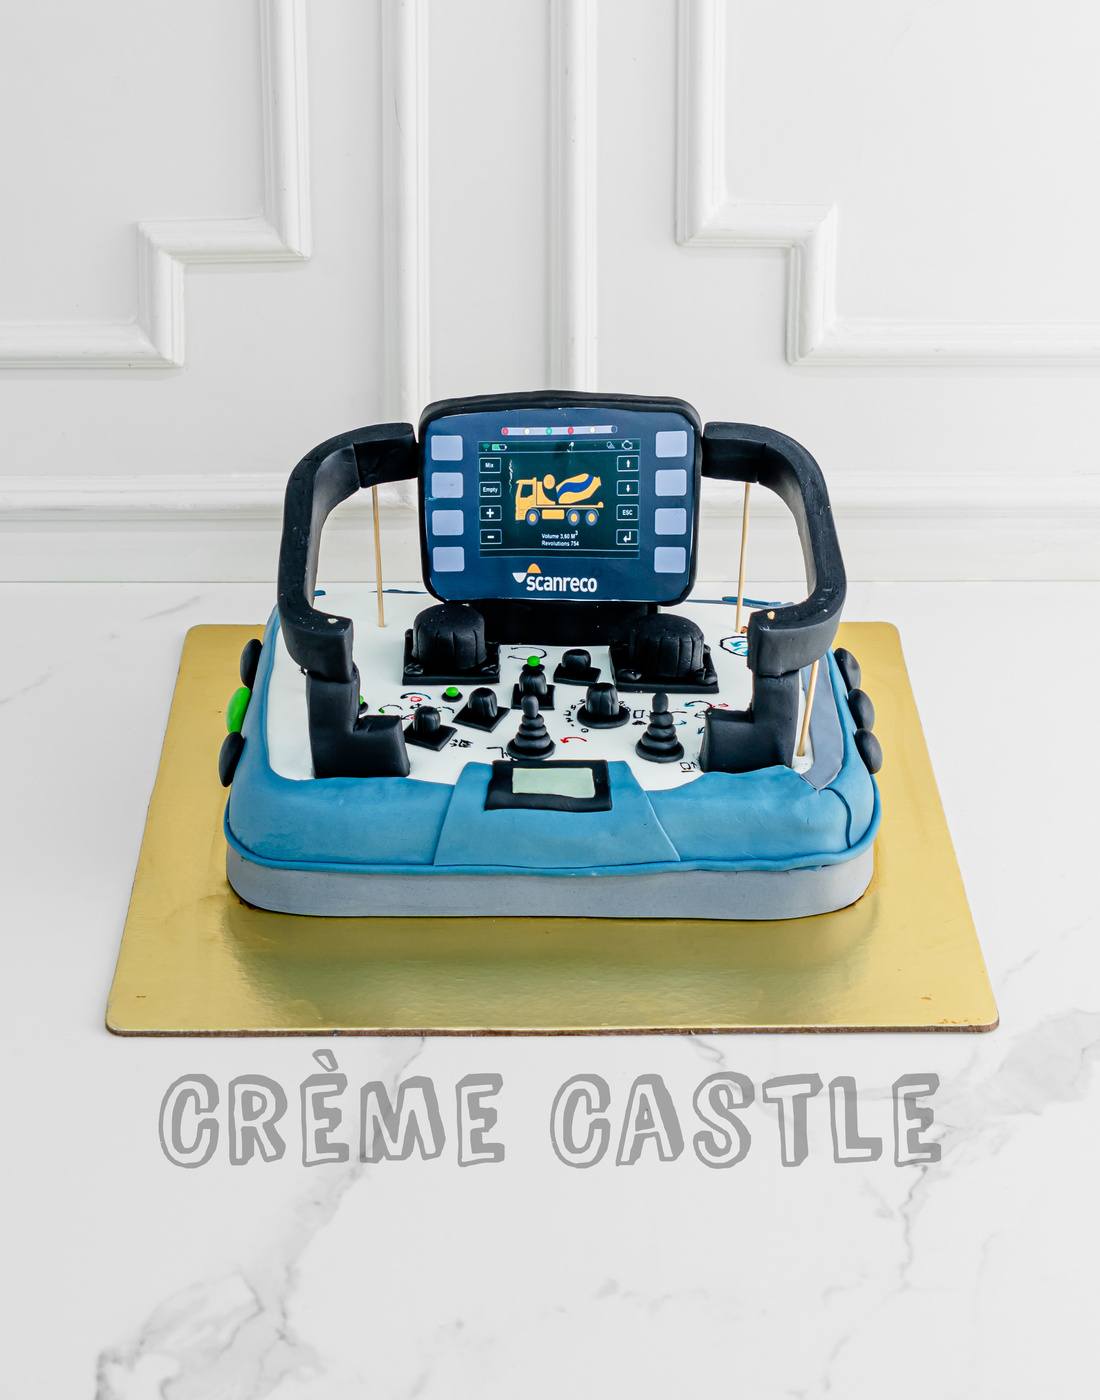 Engineering Console Cake